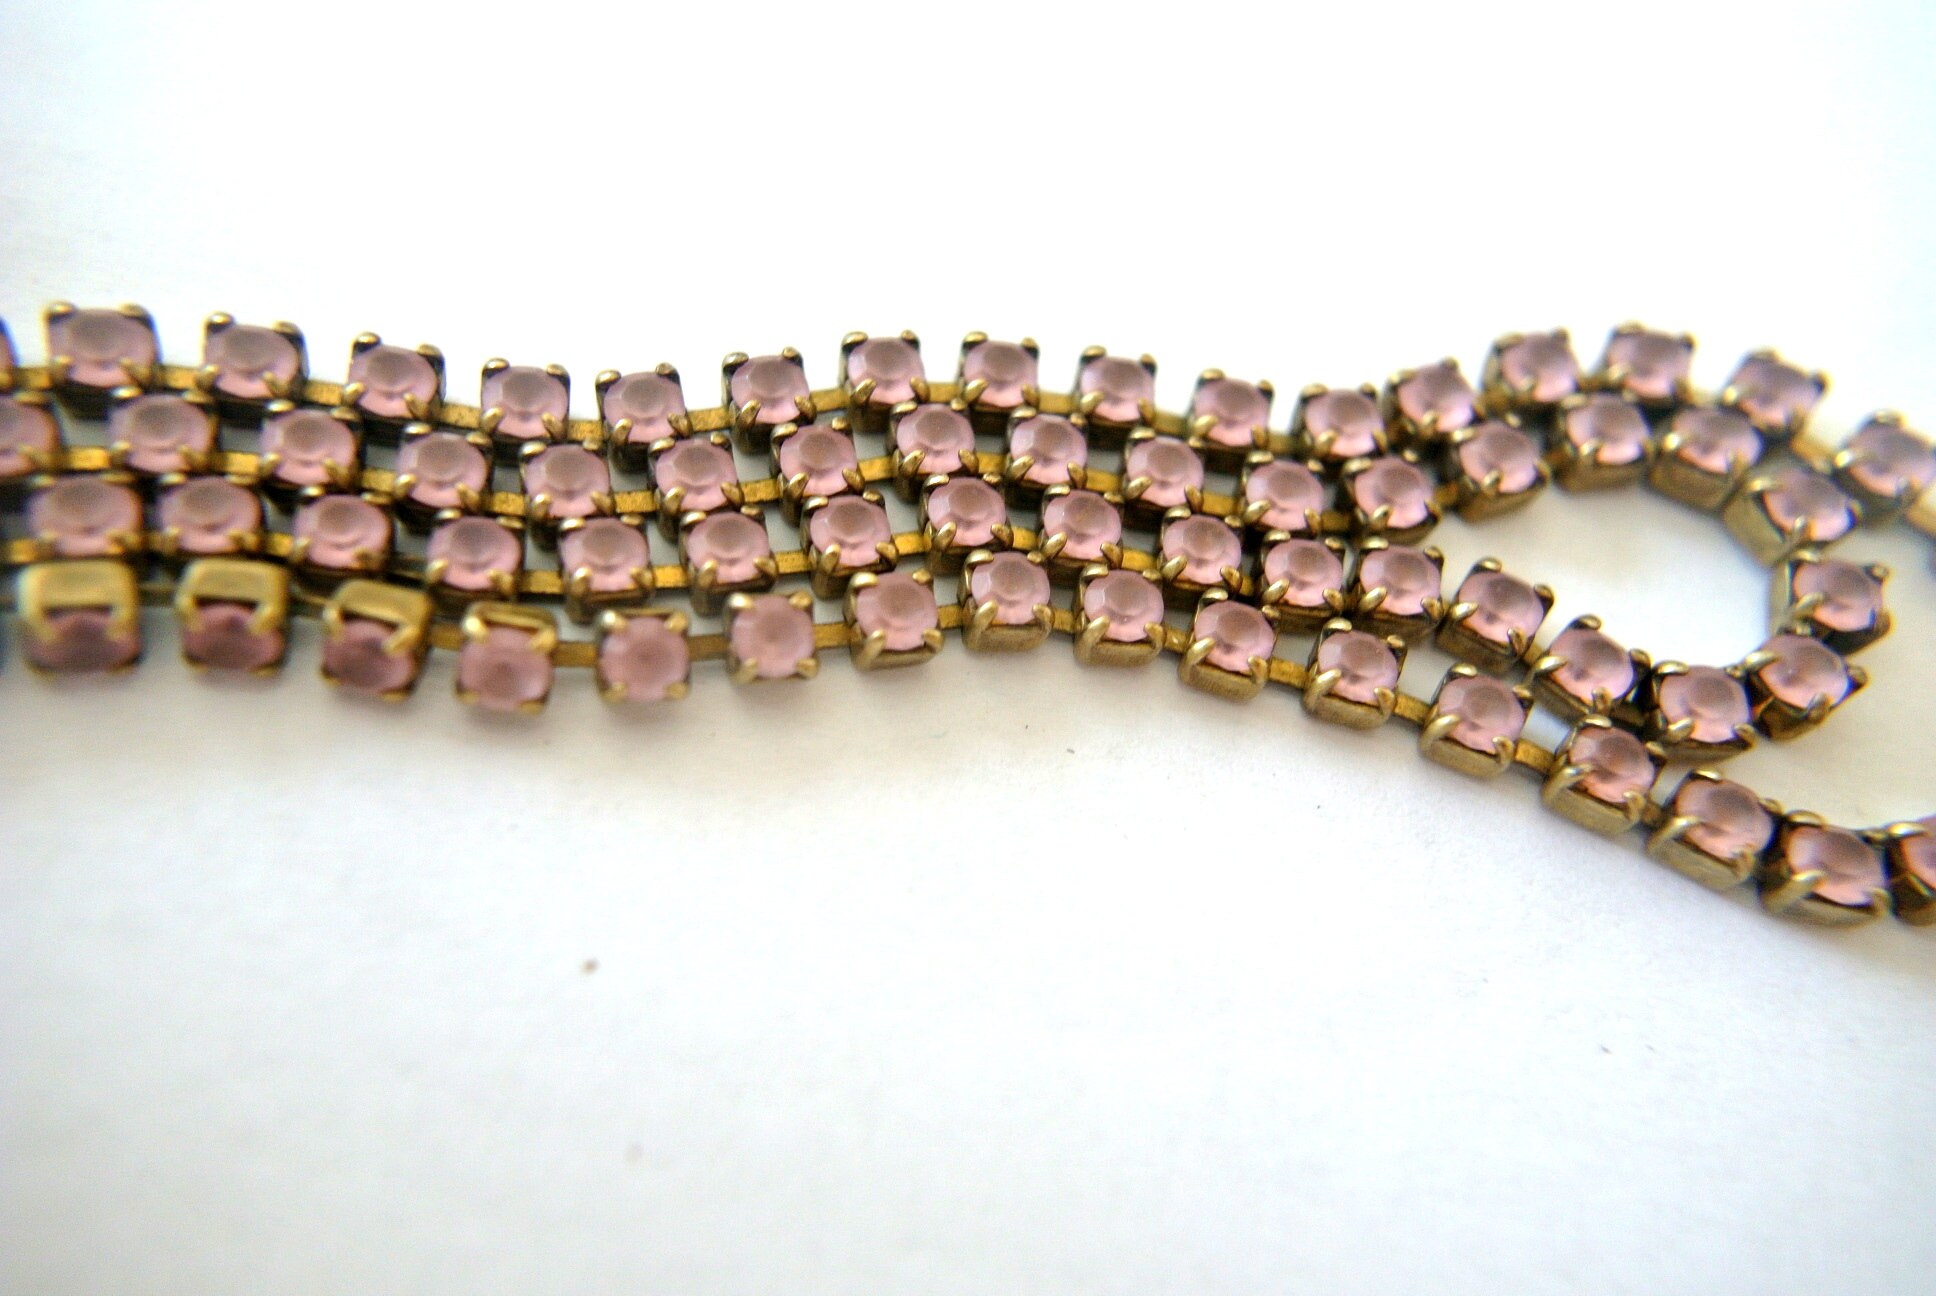 2 Vintage SWAROVSKI beads clear rhinestones crystals in metal setting  genuine 1100 made in Austria